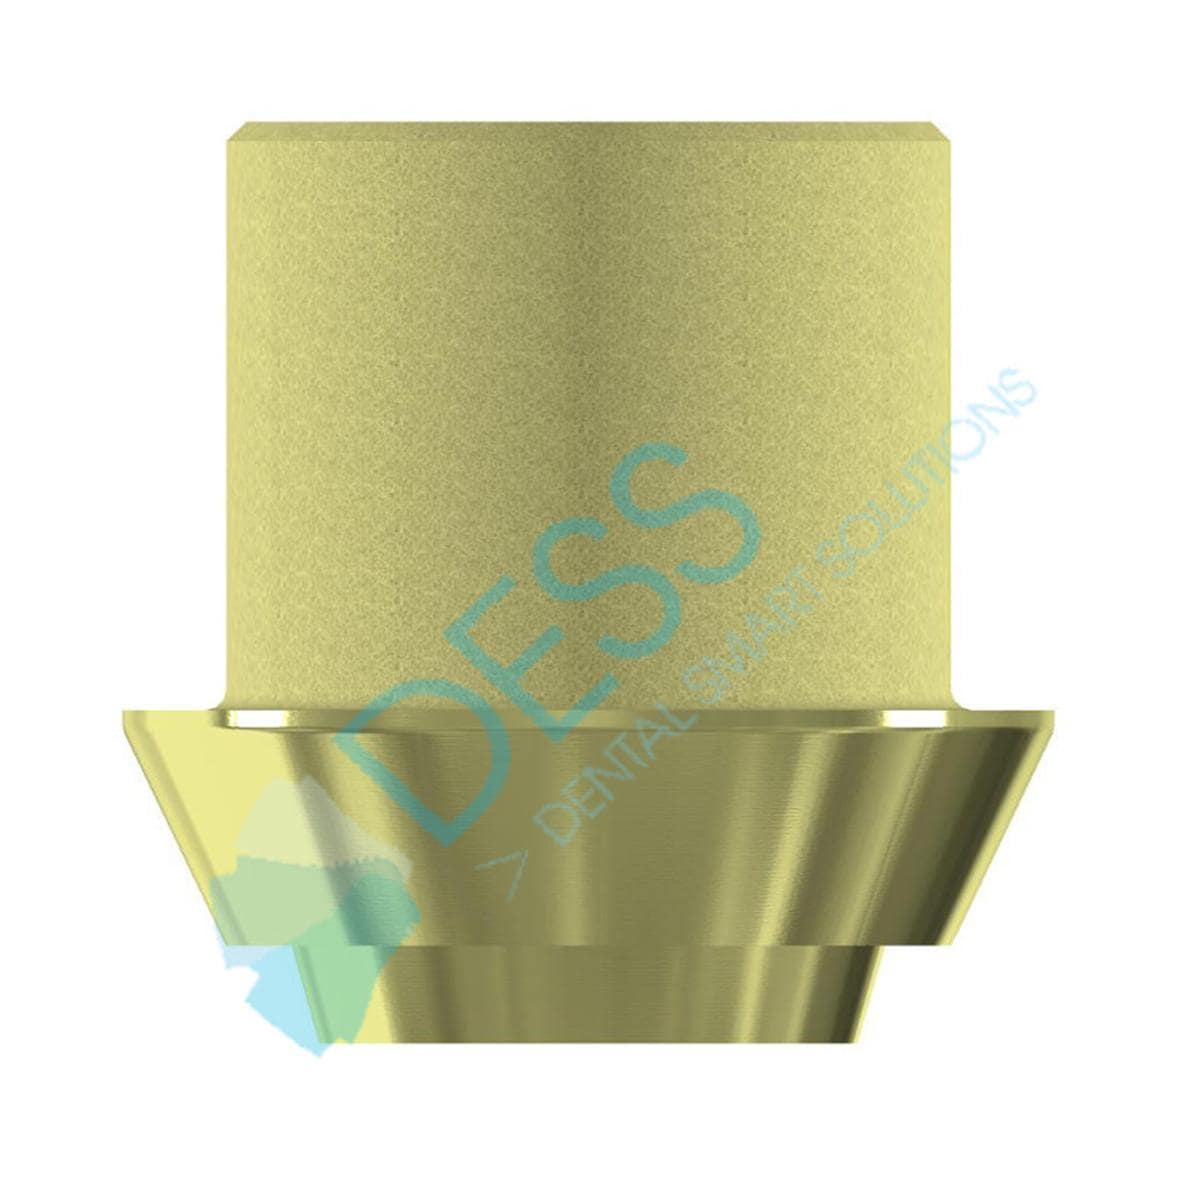 Titanbase DESS AURUMBase® - kompatibel mit Nobel Active™ / Nobel Replace® CC - NP Ø 3,5 mm, ohne Rotationsschutz